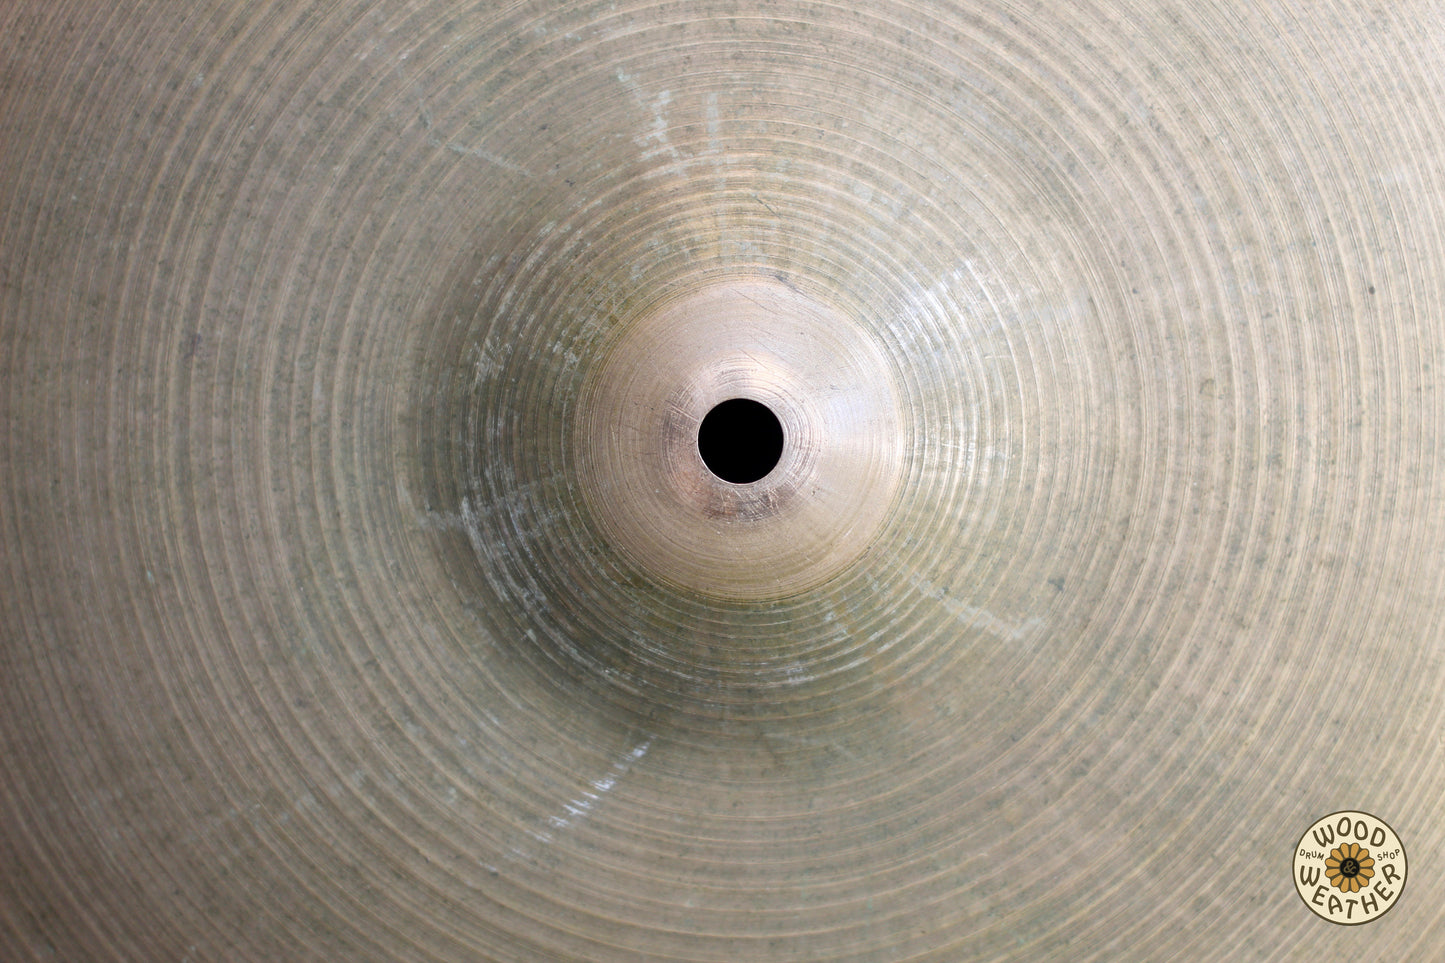 1950s A. Zildjian 14" Hi-Hat Cymbals 860/1135g